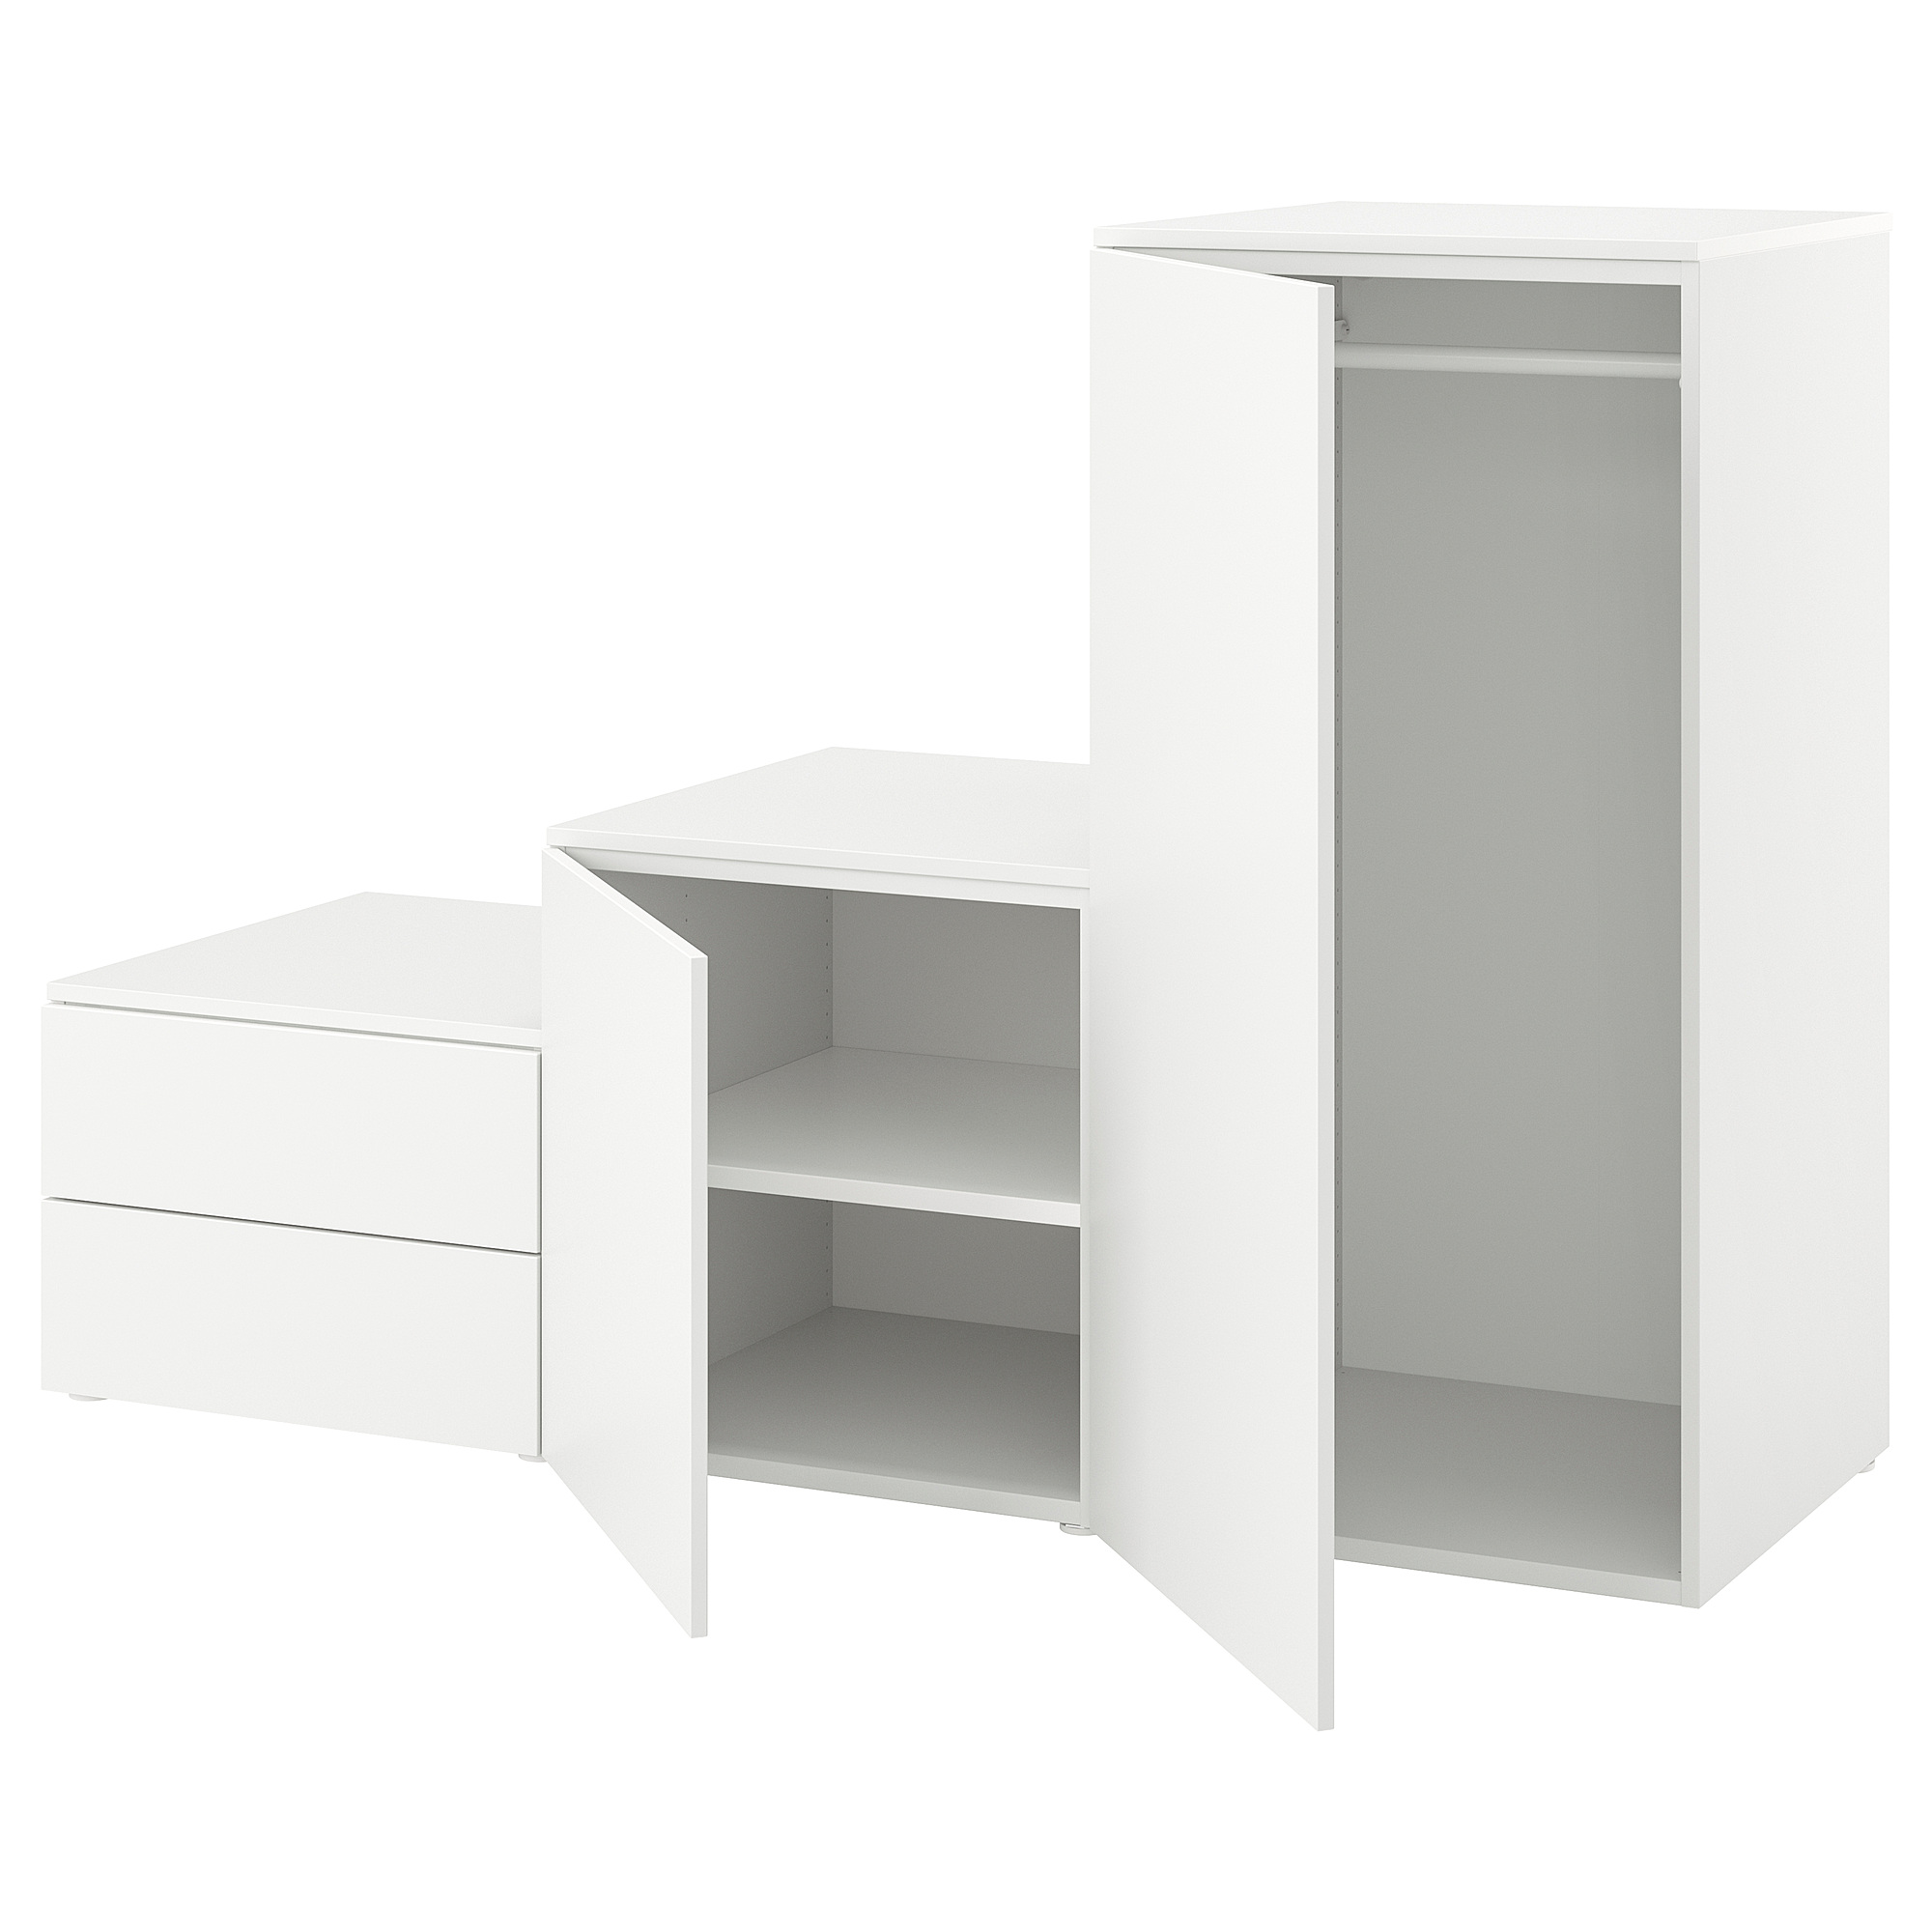 PLATSA wardrobe with 2 doors+2 drawers